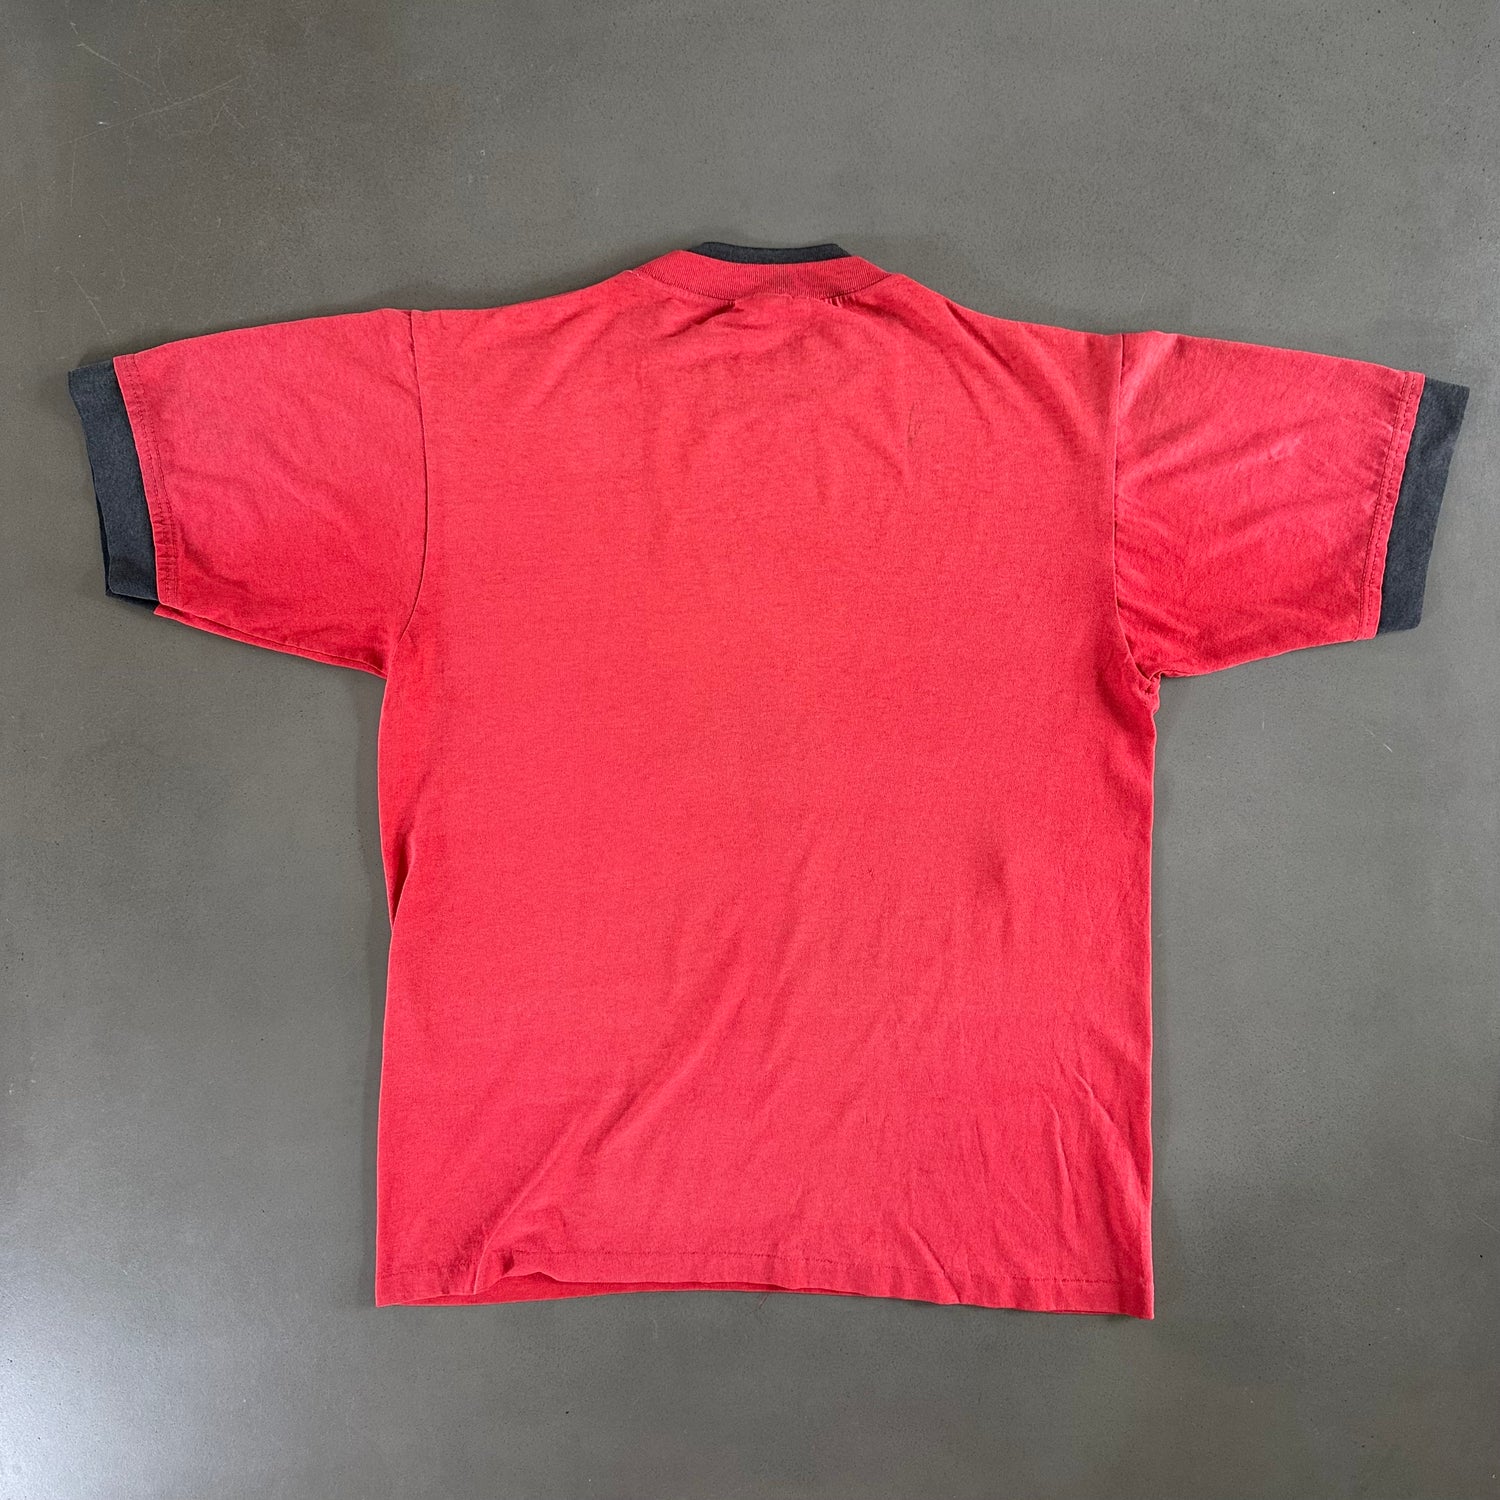 Vintage 1990s Spalding T-shirt size Large